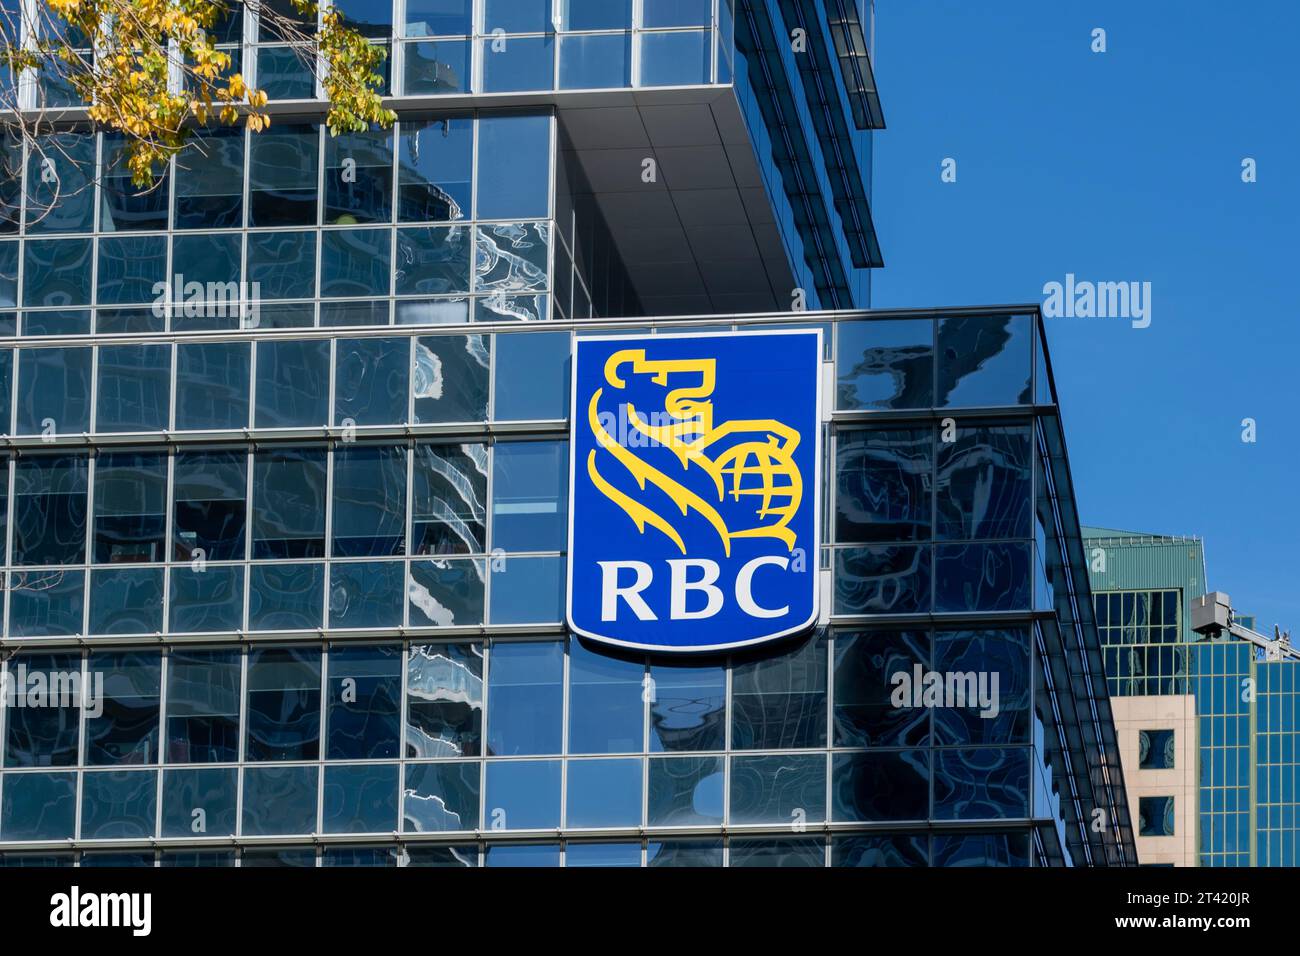 RBC (Royal Bank of Canada) logo on the building in Toronto, Ontario, Canada Stock Photo